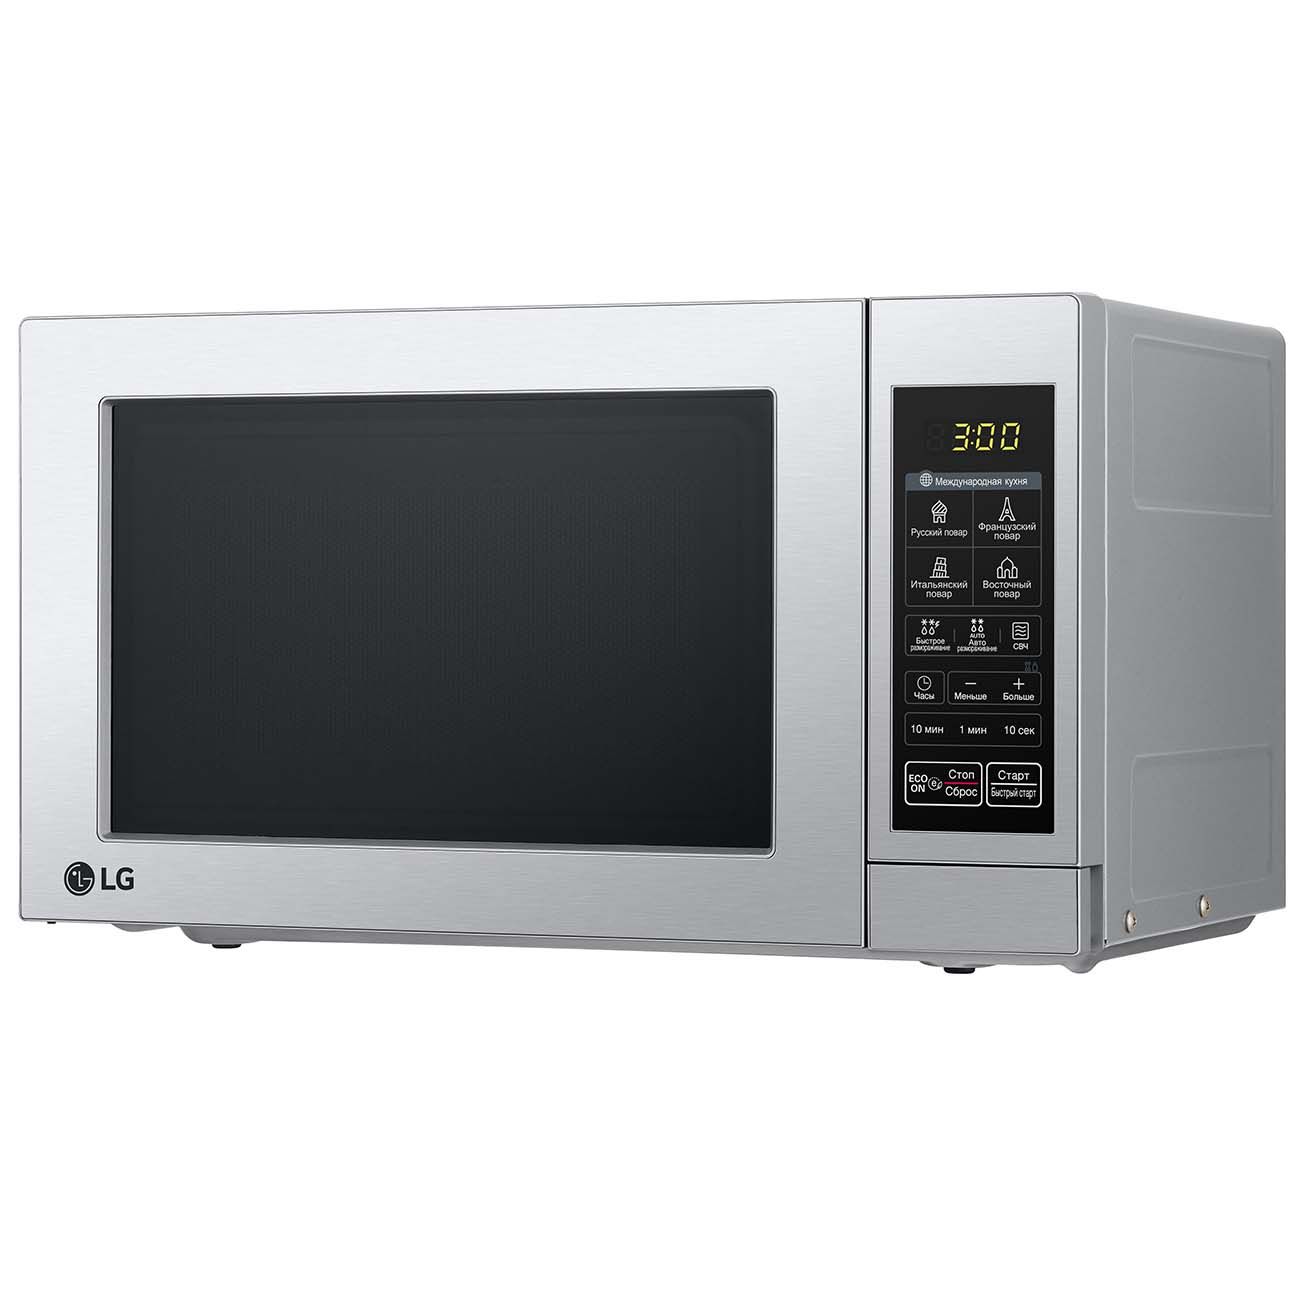 Свч соло. LG MS-2044v. Микроволновая печь LG ms2044v. Микроволновая печь LG ms2044v серебристый. Микроволновая печь LG MS-2044vat.